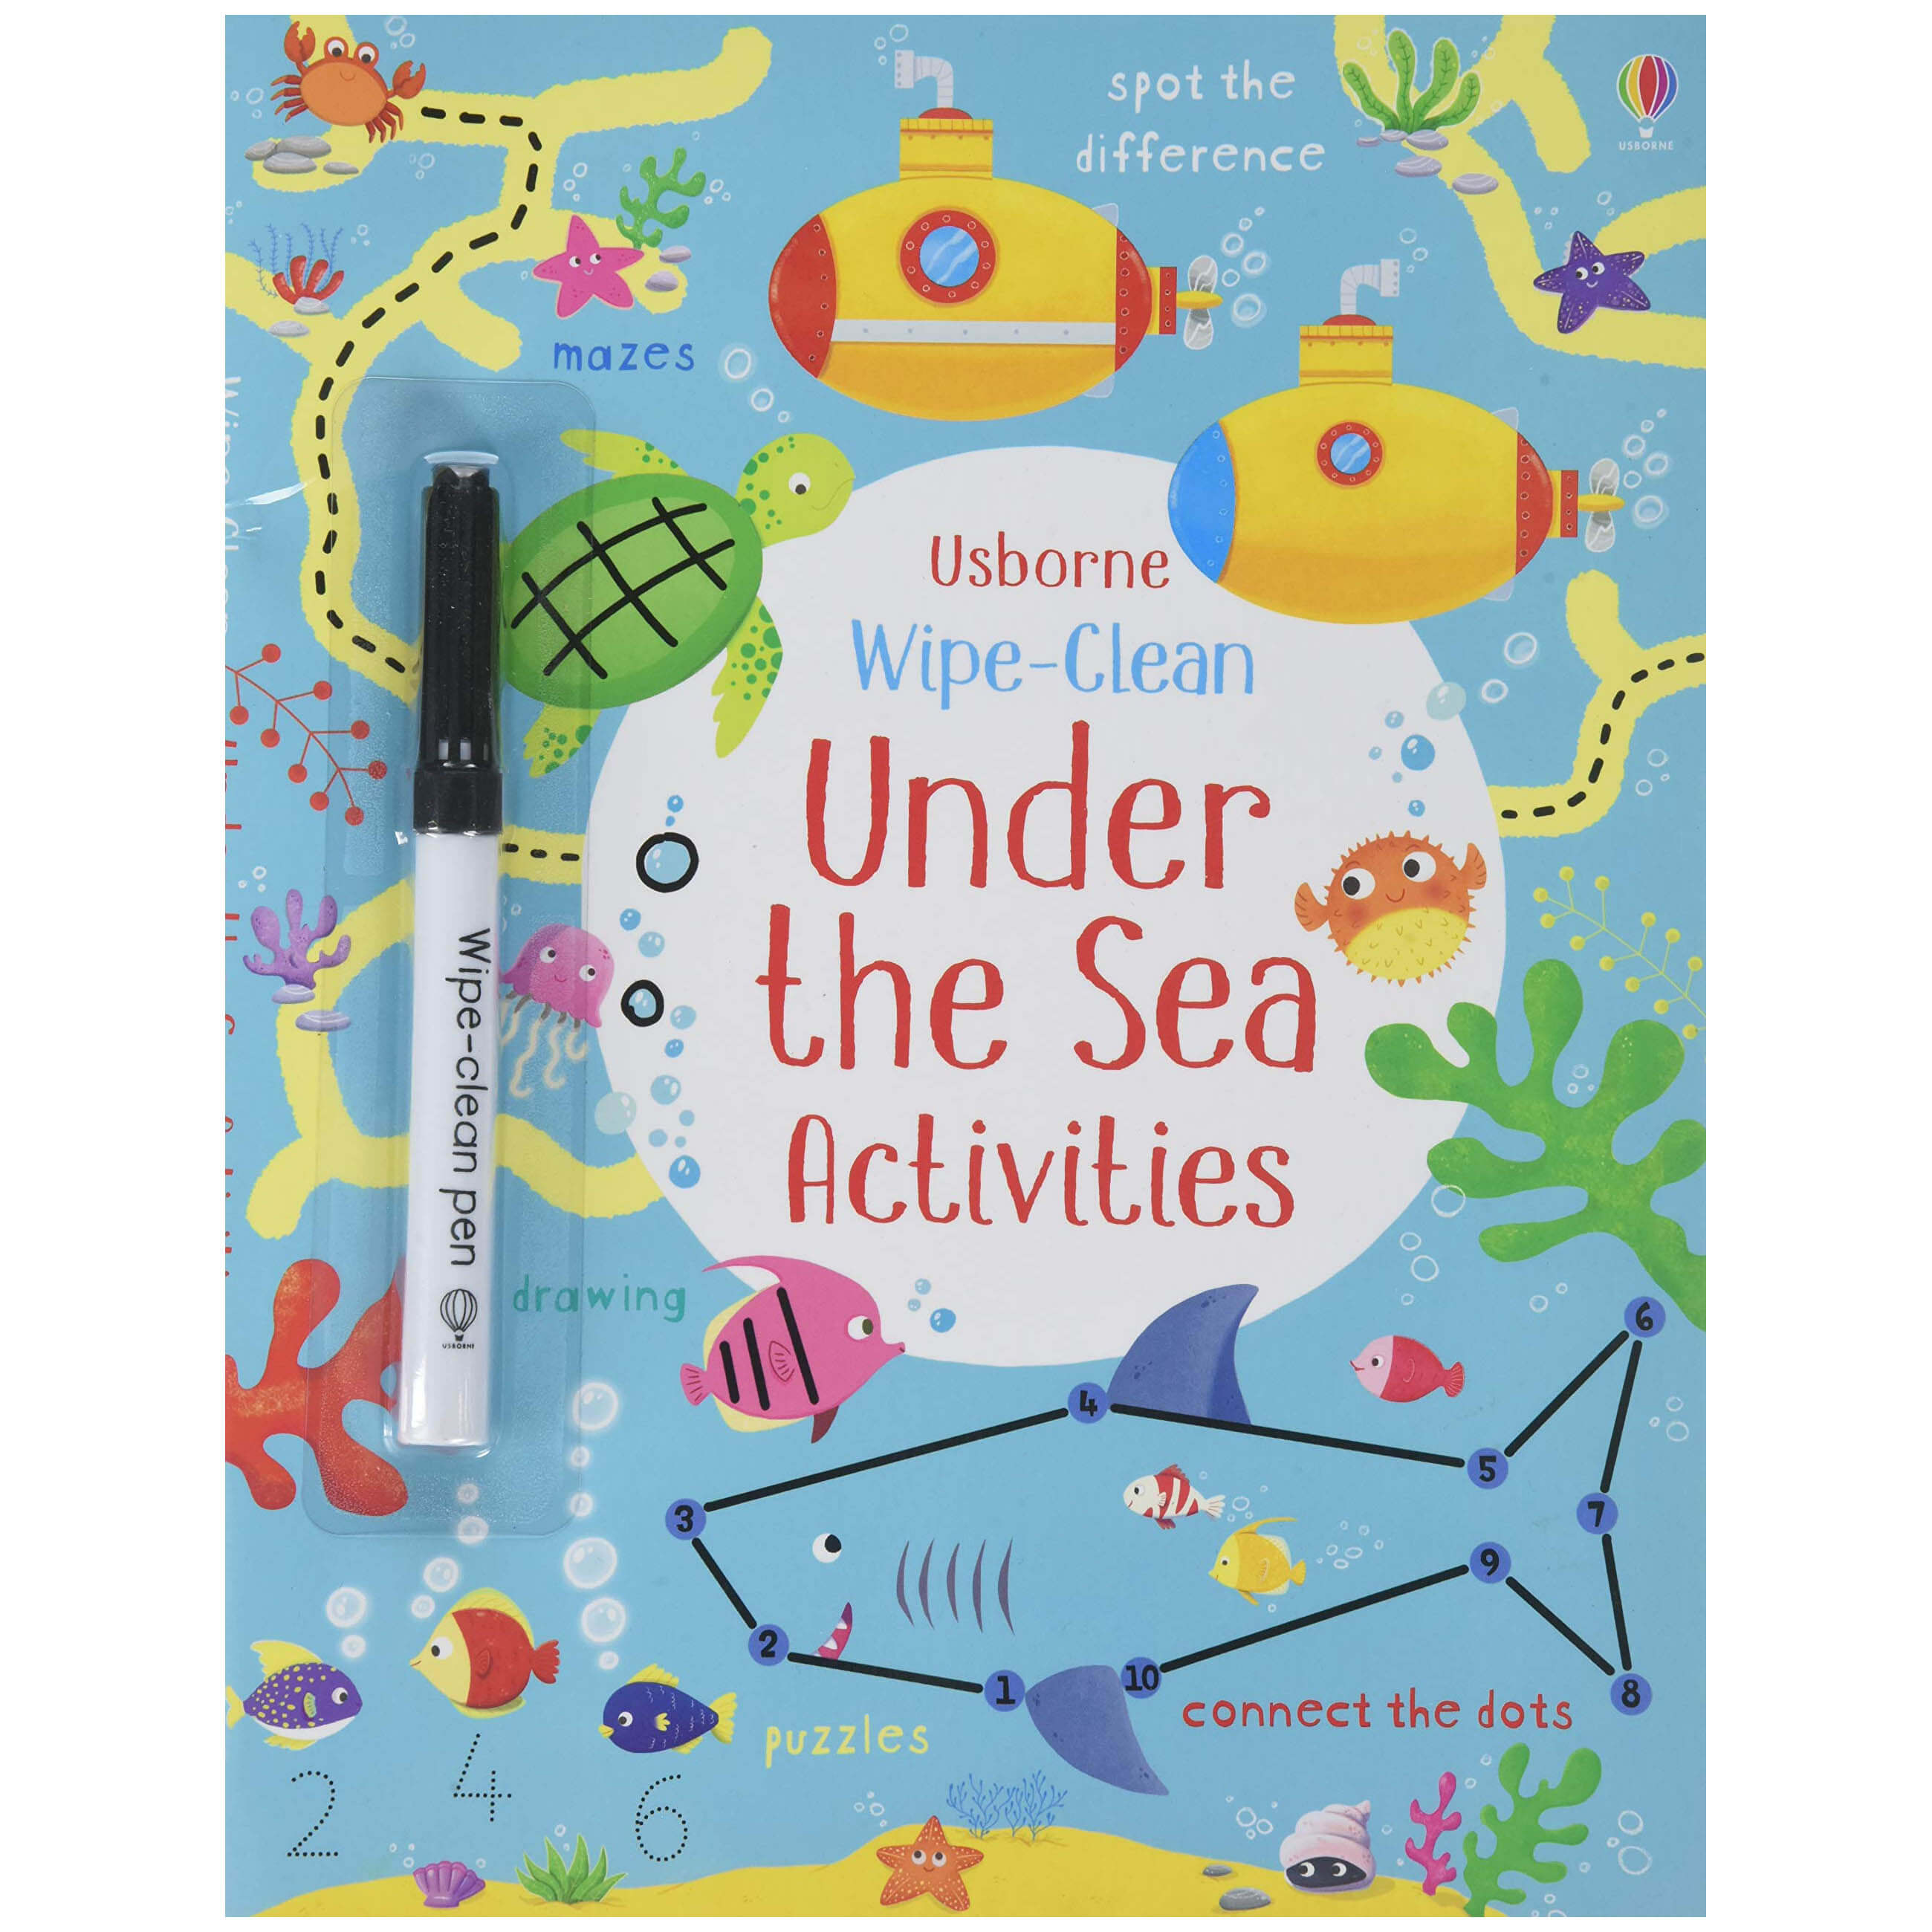 Usborne Wipe-Clean Under the Sea Activities (Wipe-Clean Activity Books)